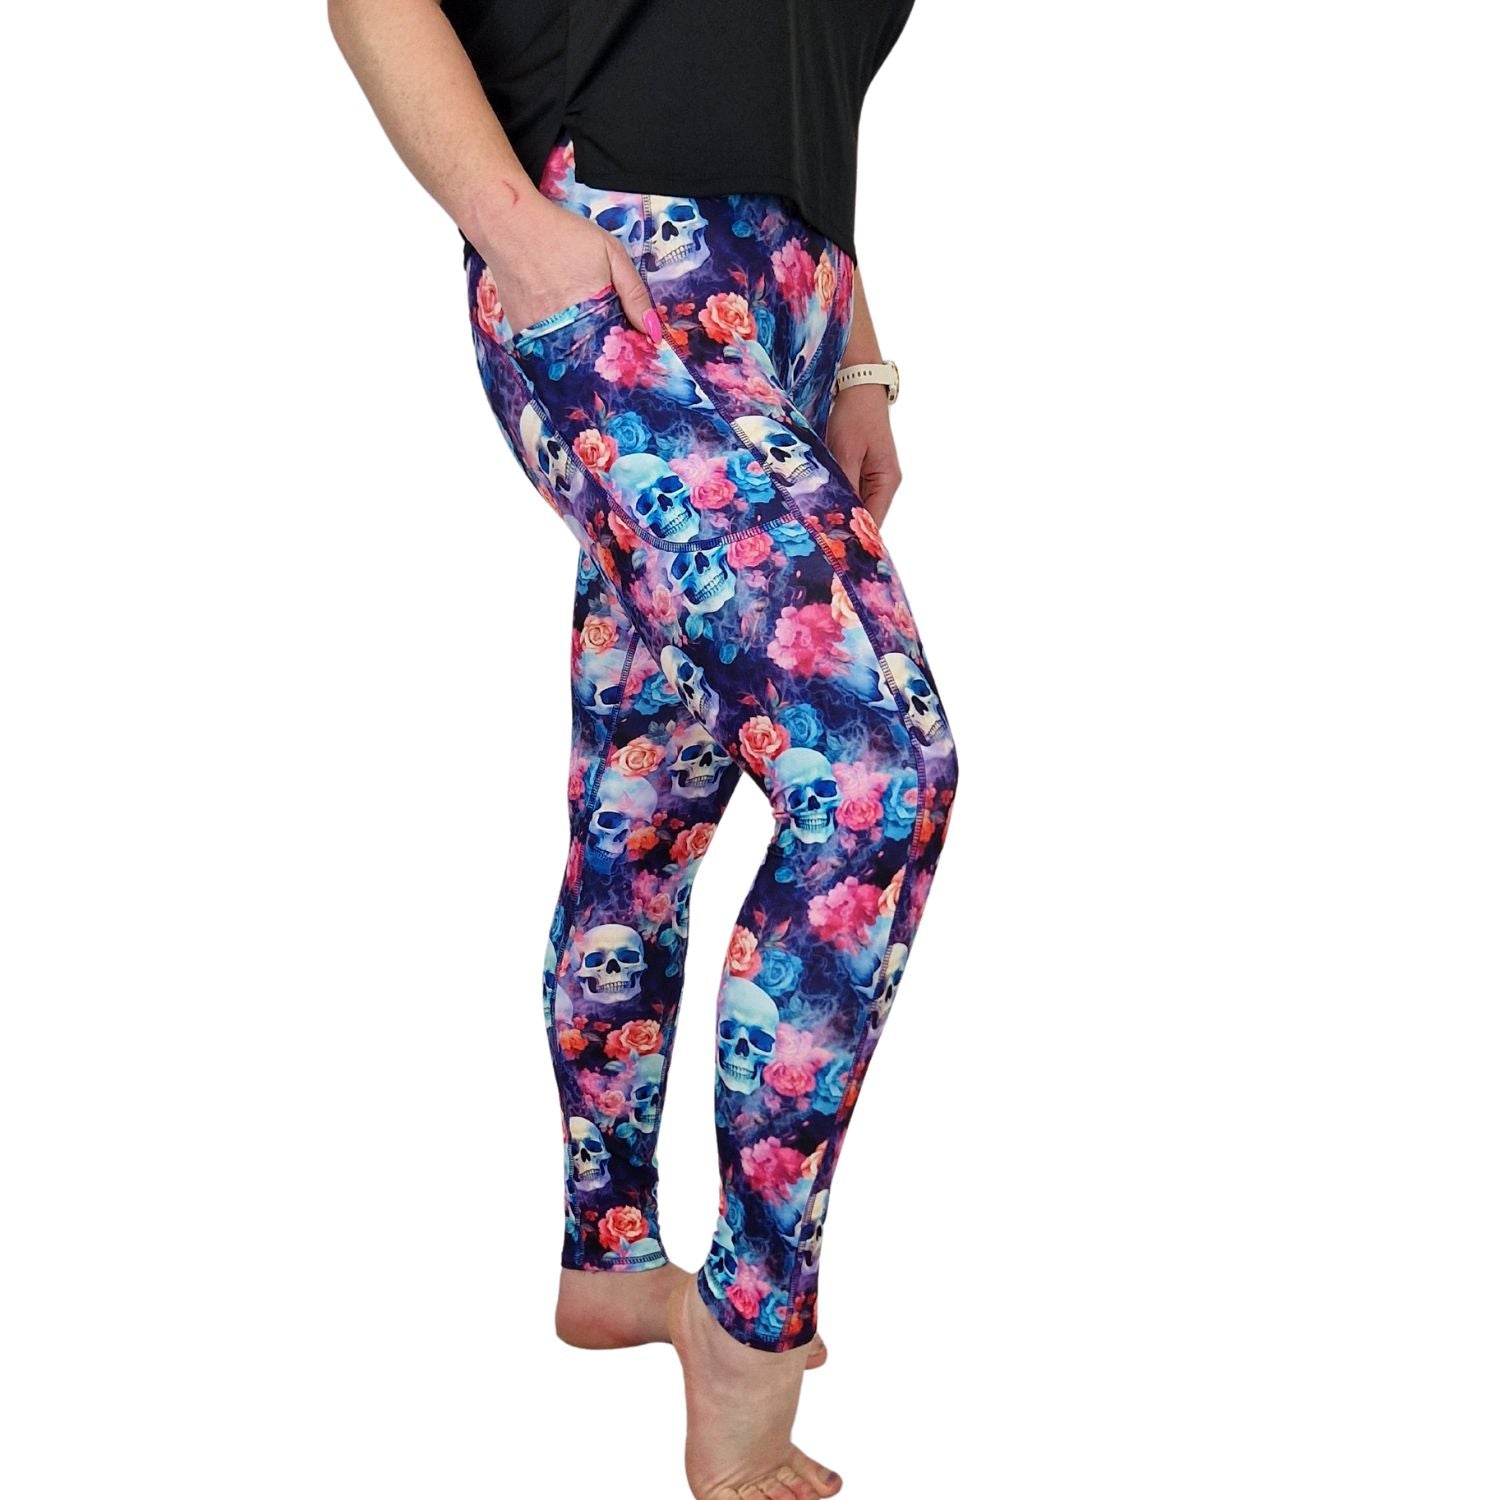 Best Deal for No Boundaries Yoga Pants Plus Size Women Full Length